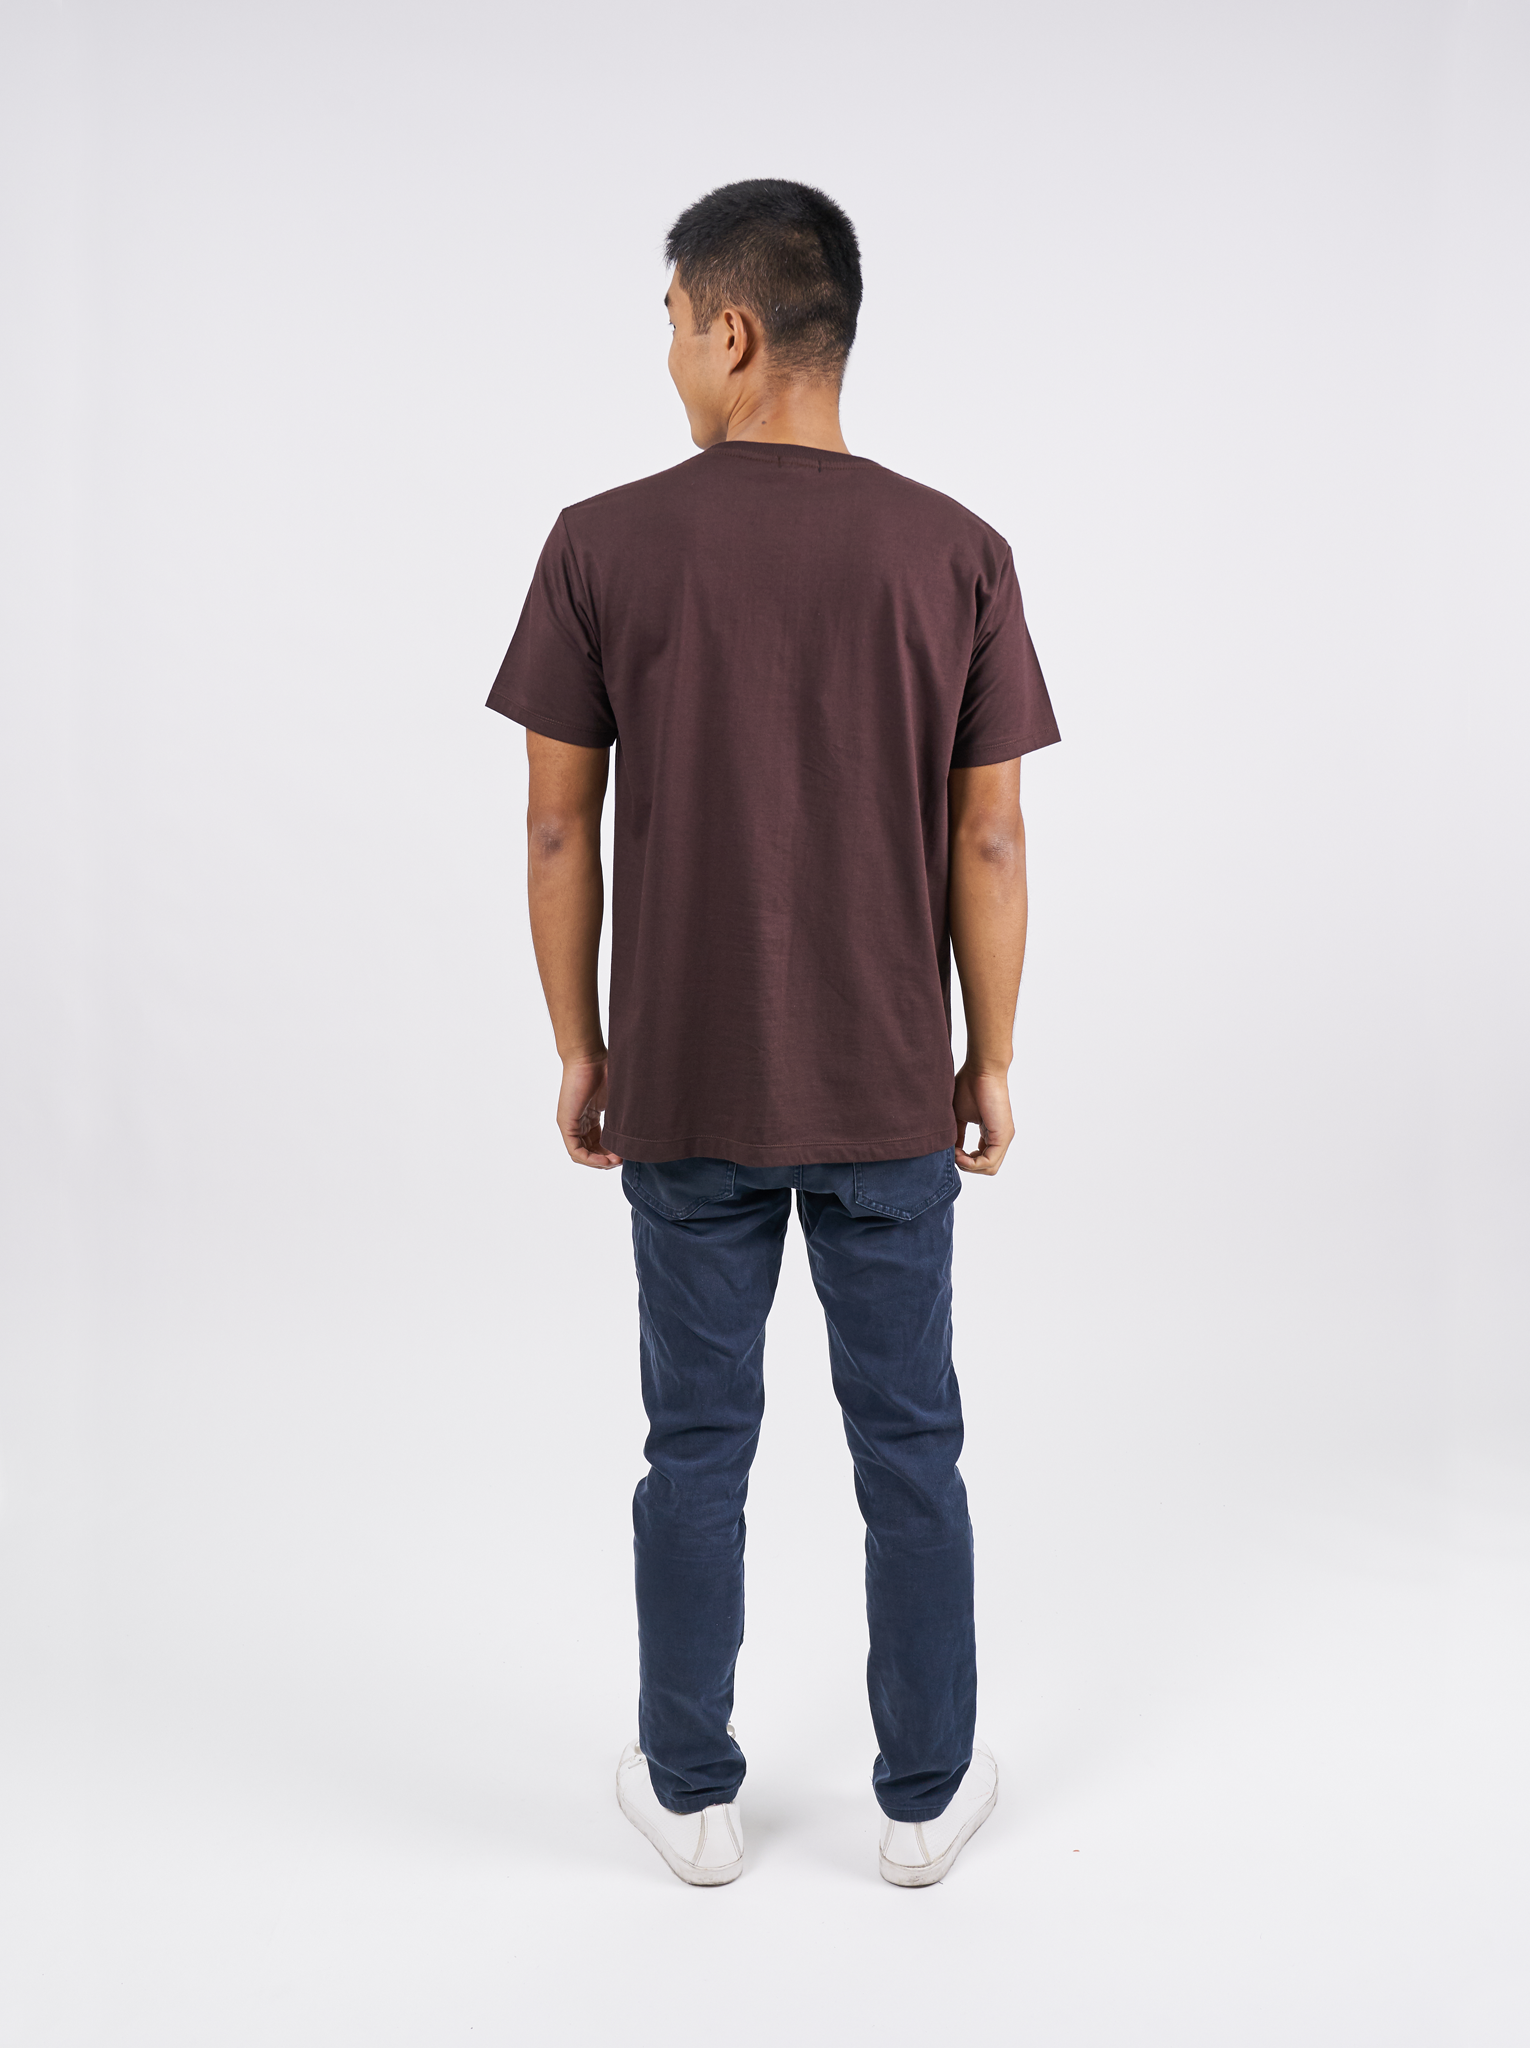 T-Shirt เสื้อยืด (Brown, สีน้ำตาล)(Unisex)